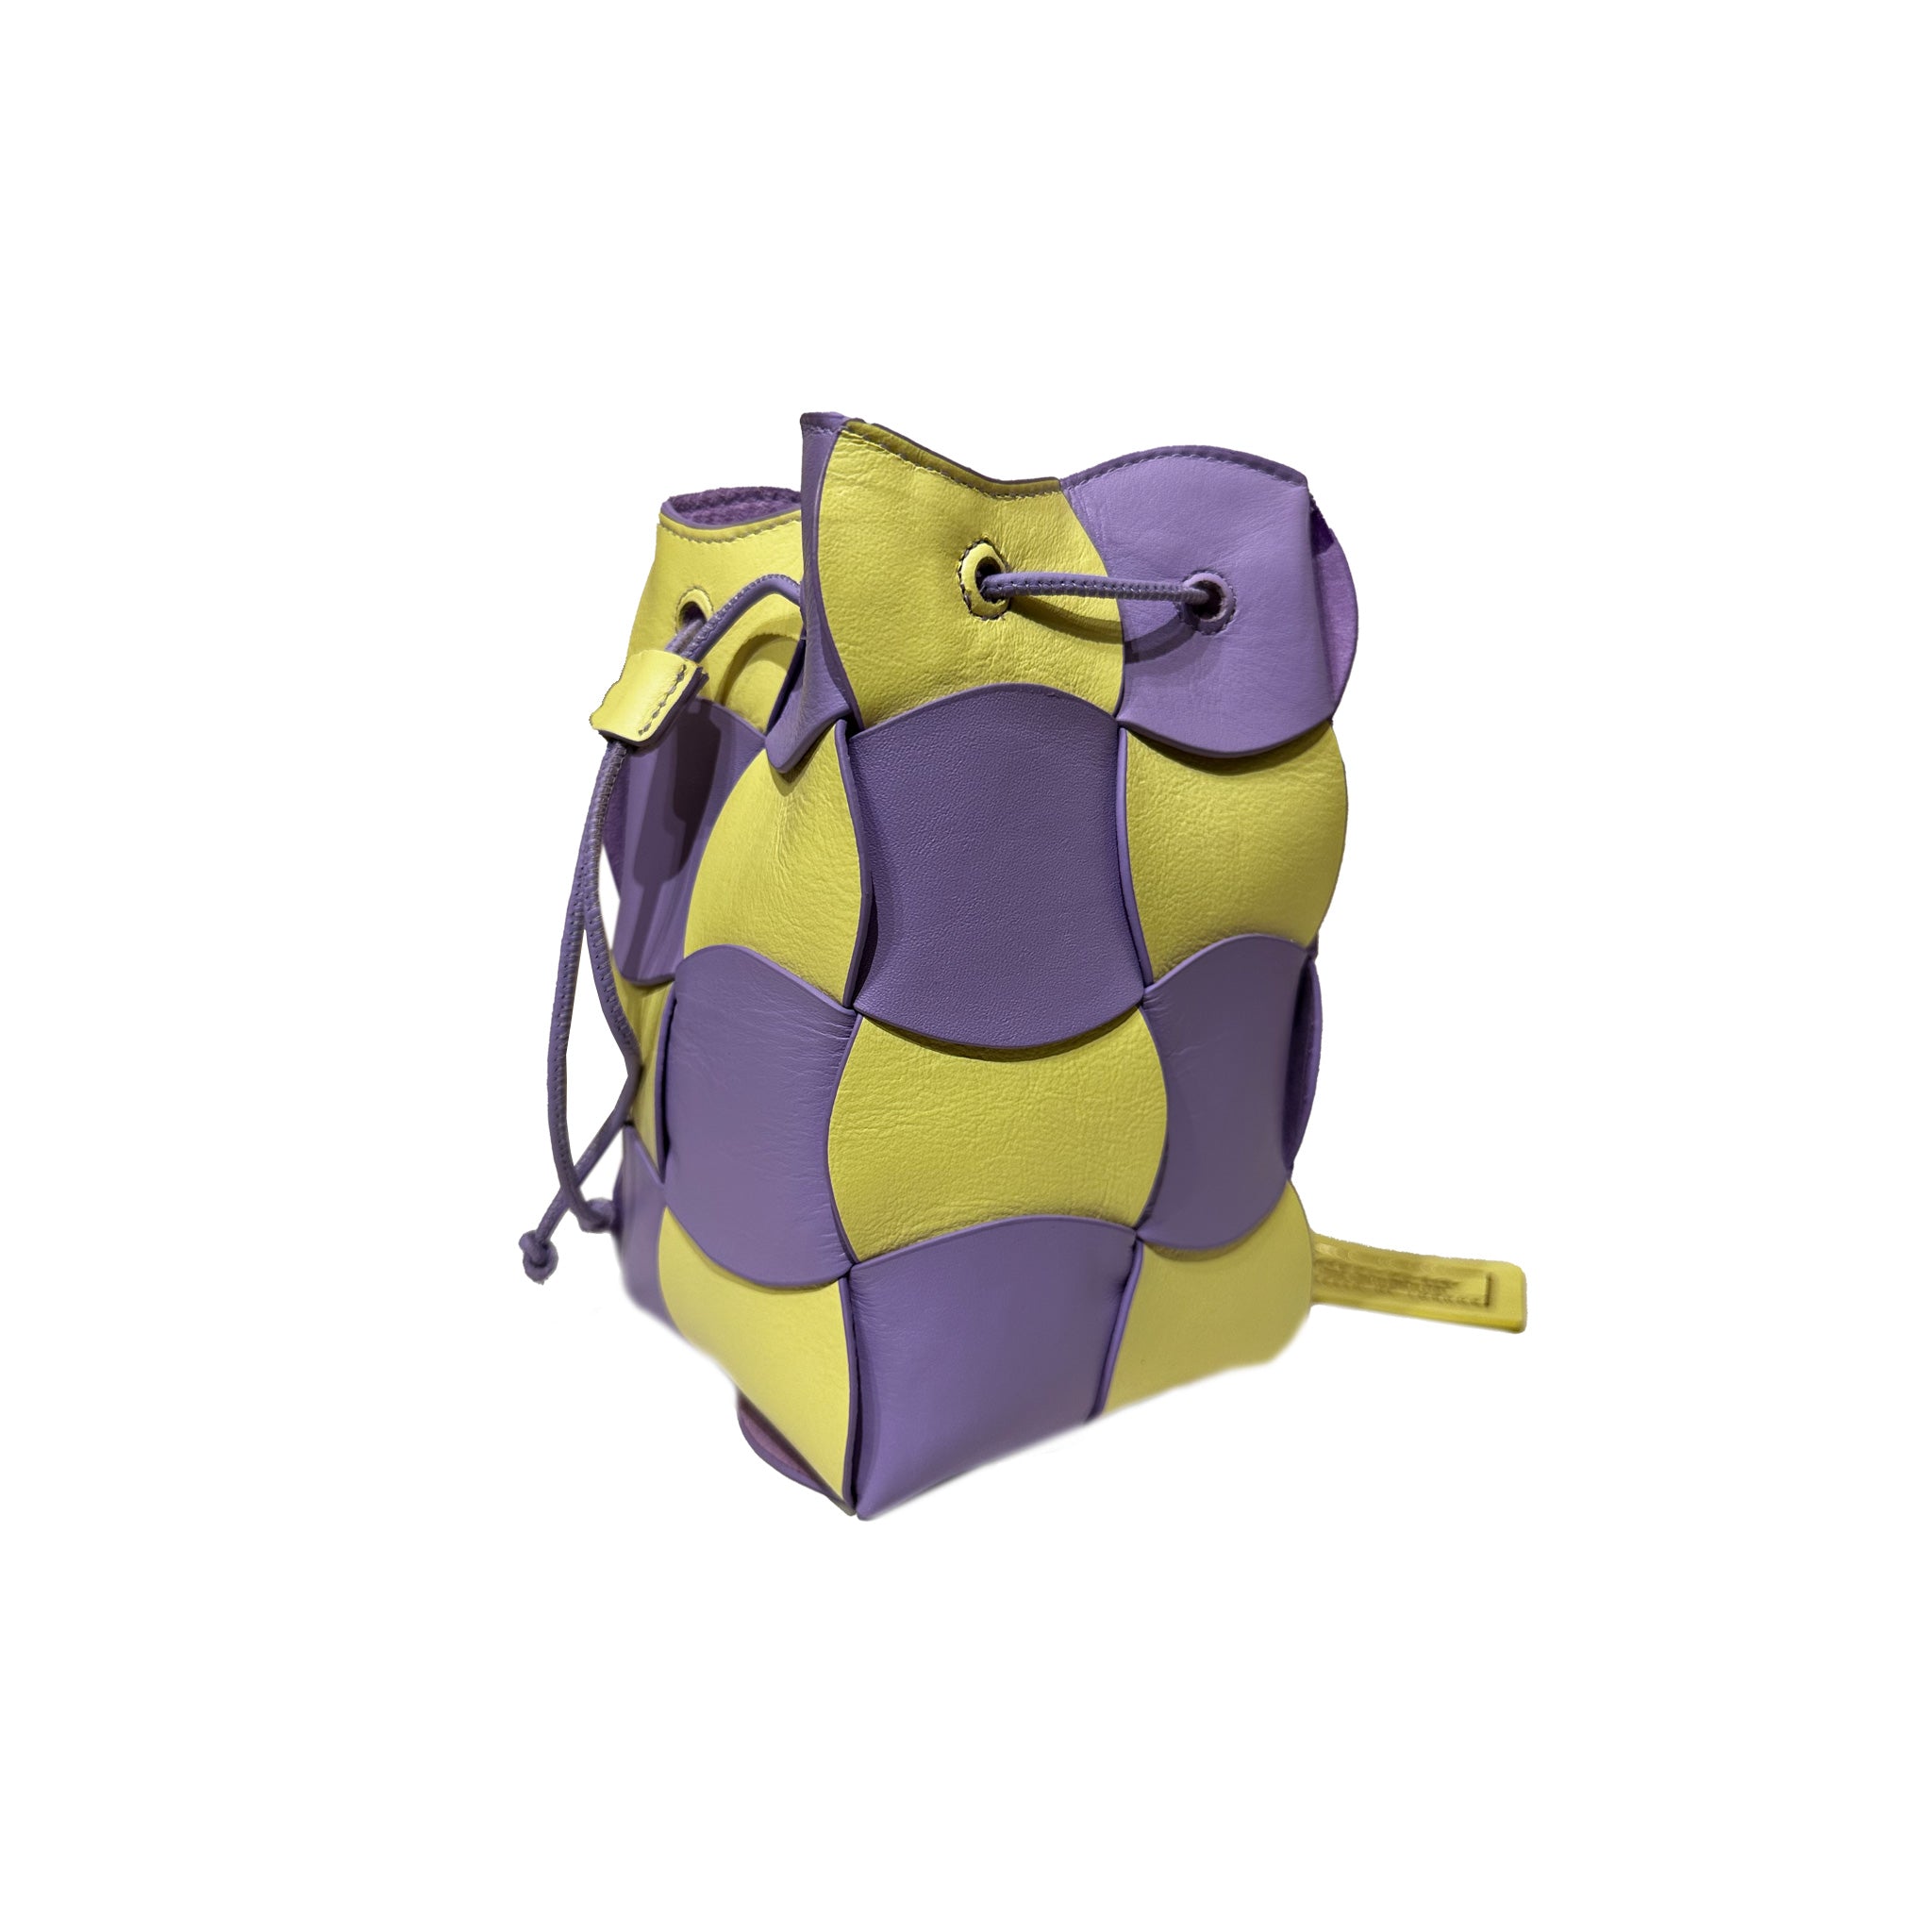 Elfin Yellow and Light Purple Leather Bucket Bag